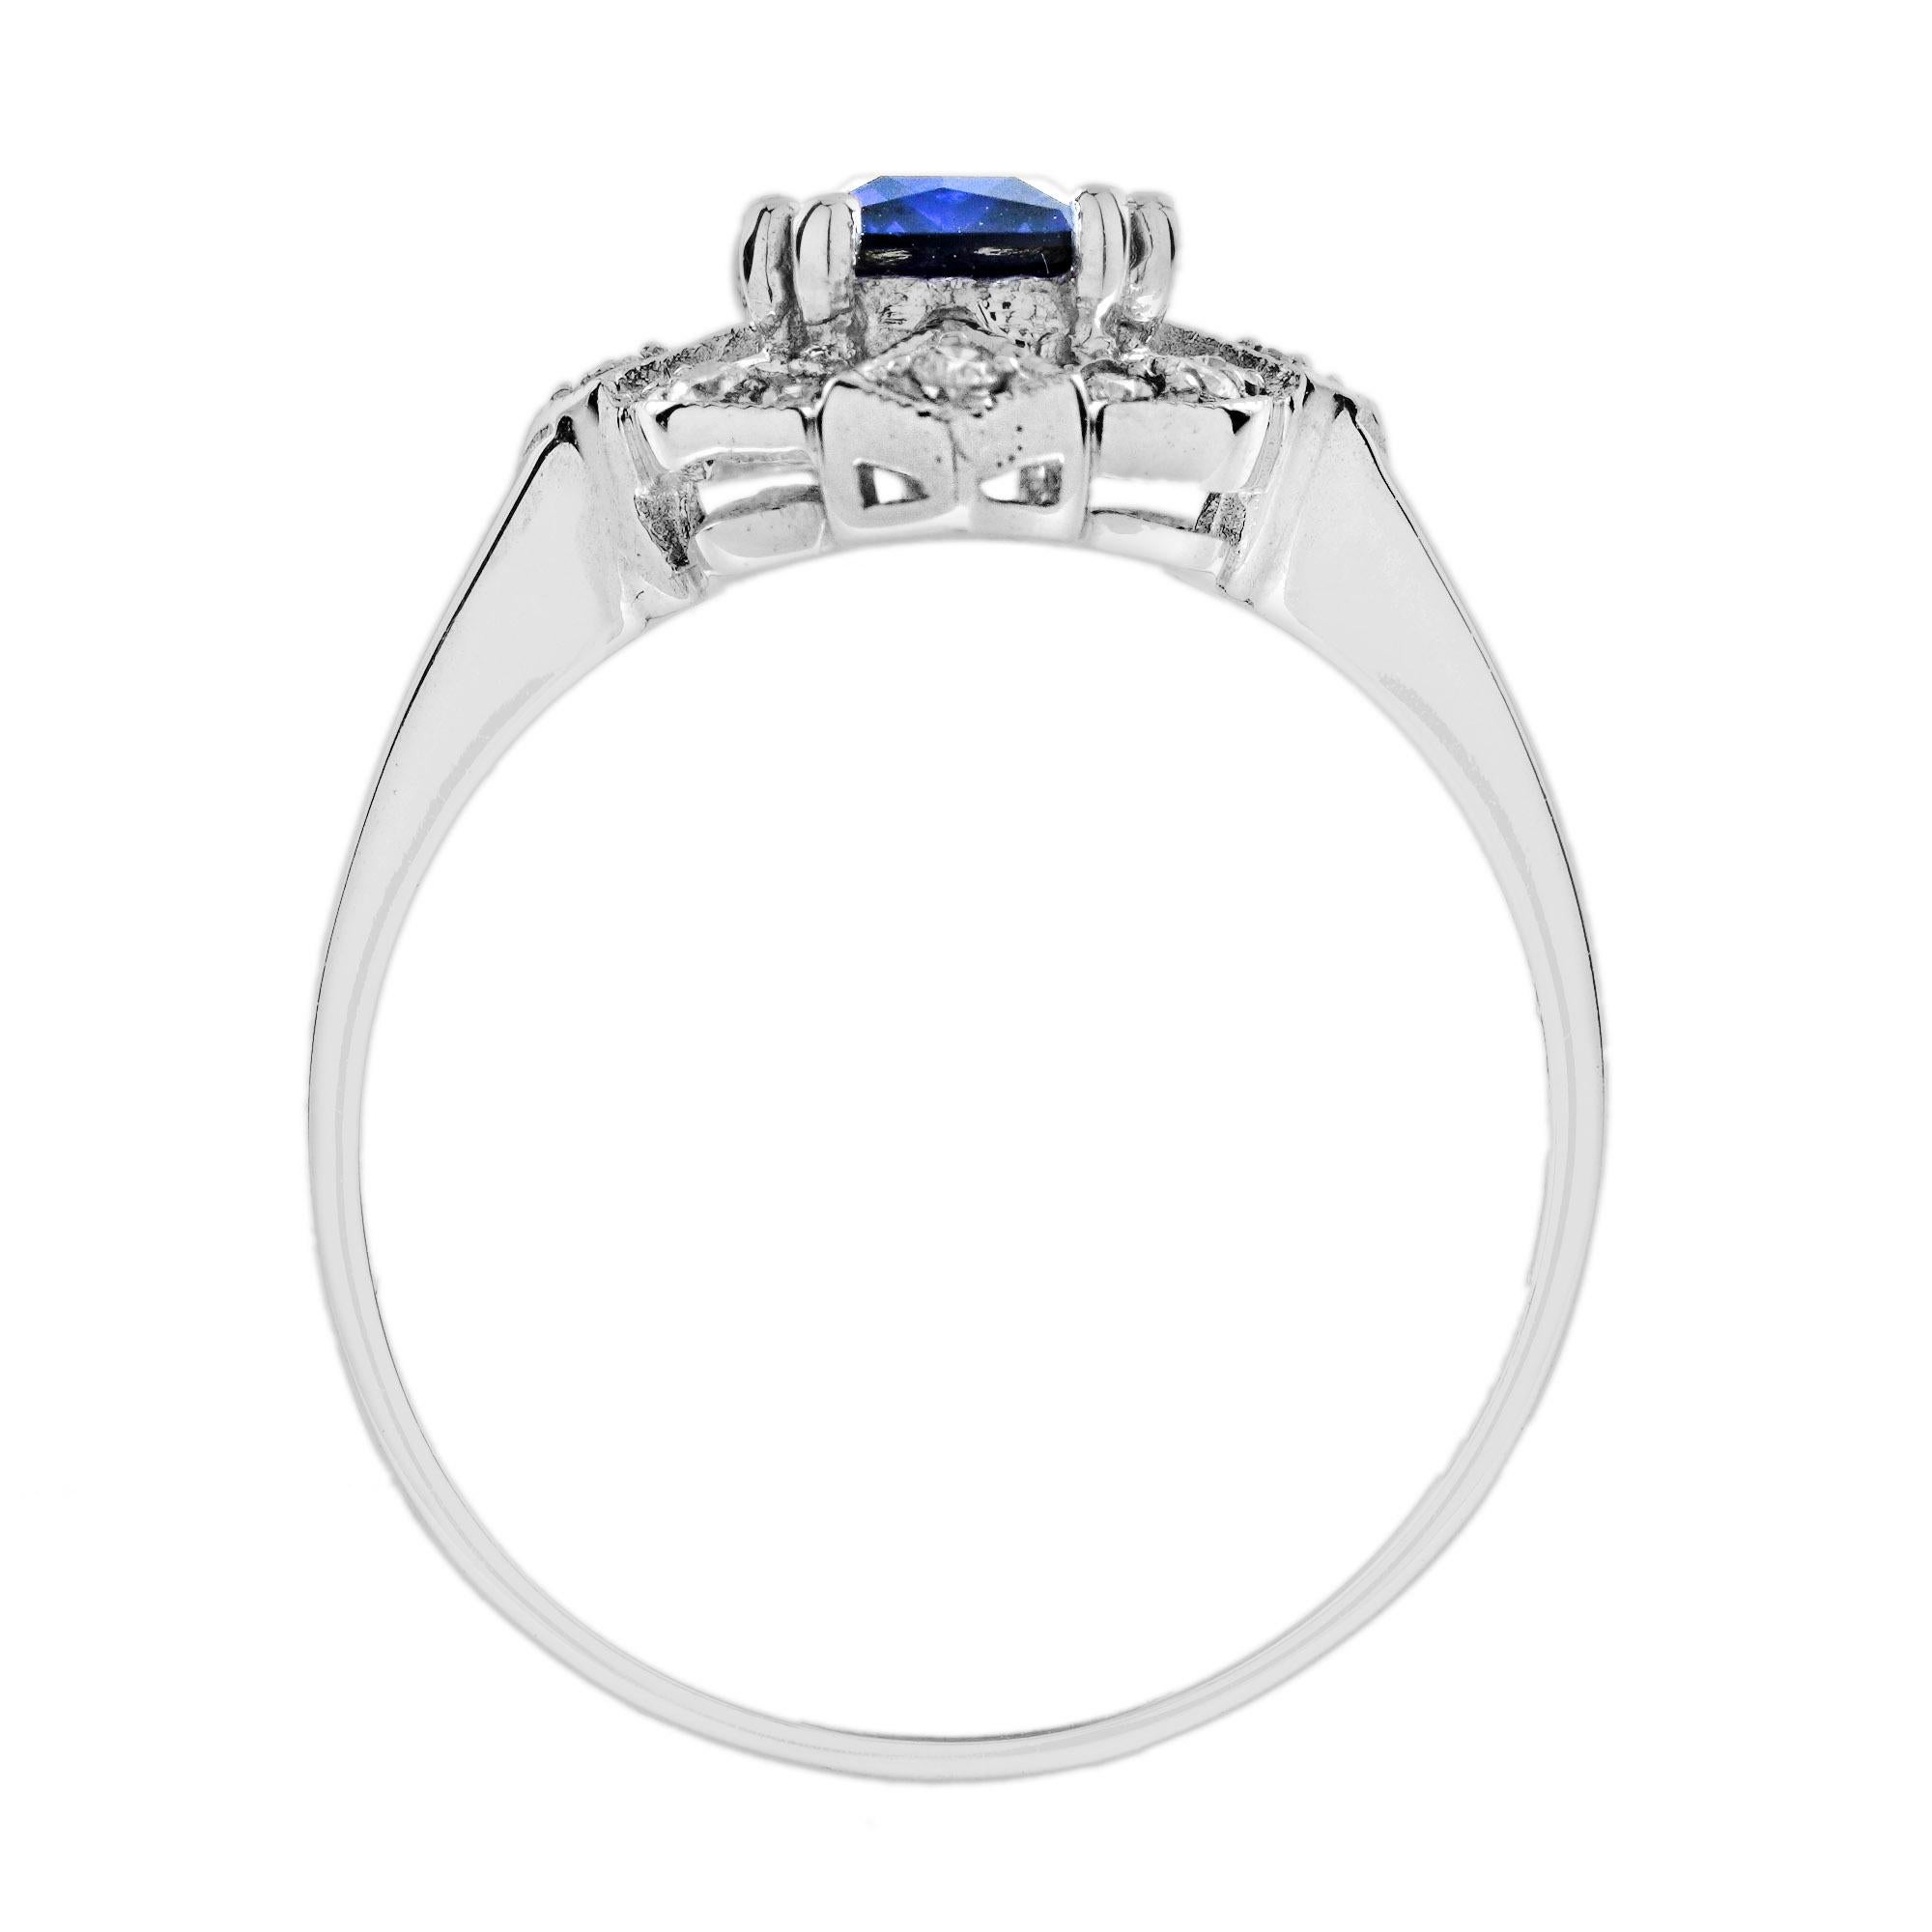 For Sale:  Emerald Cut Ceylon Sapphire and Diamond Halo Ring in 18K White Gold 6